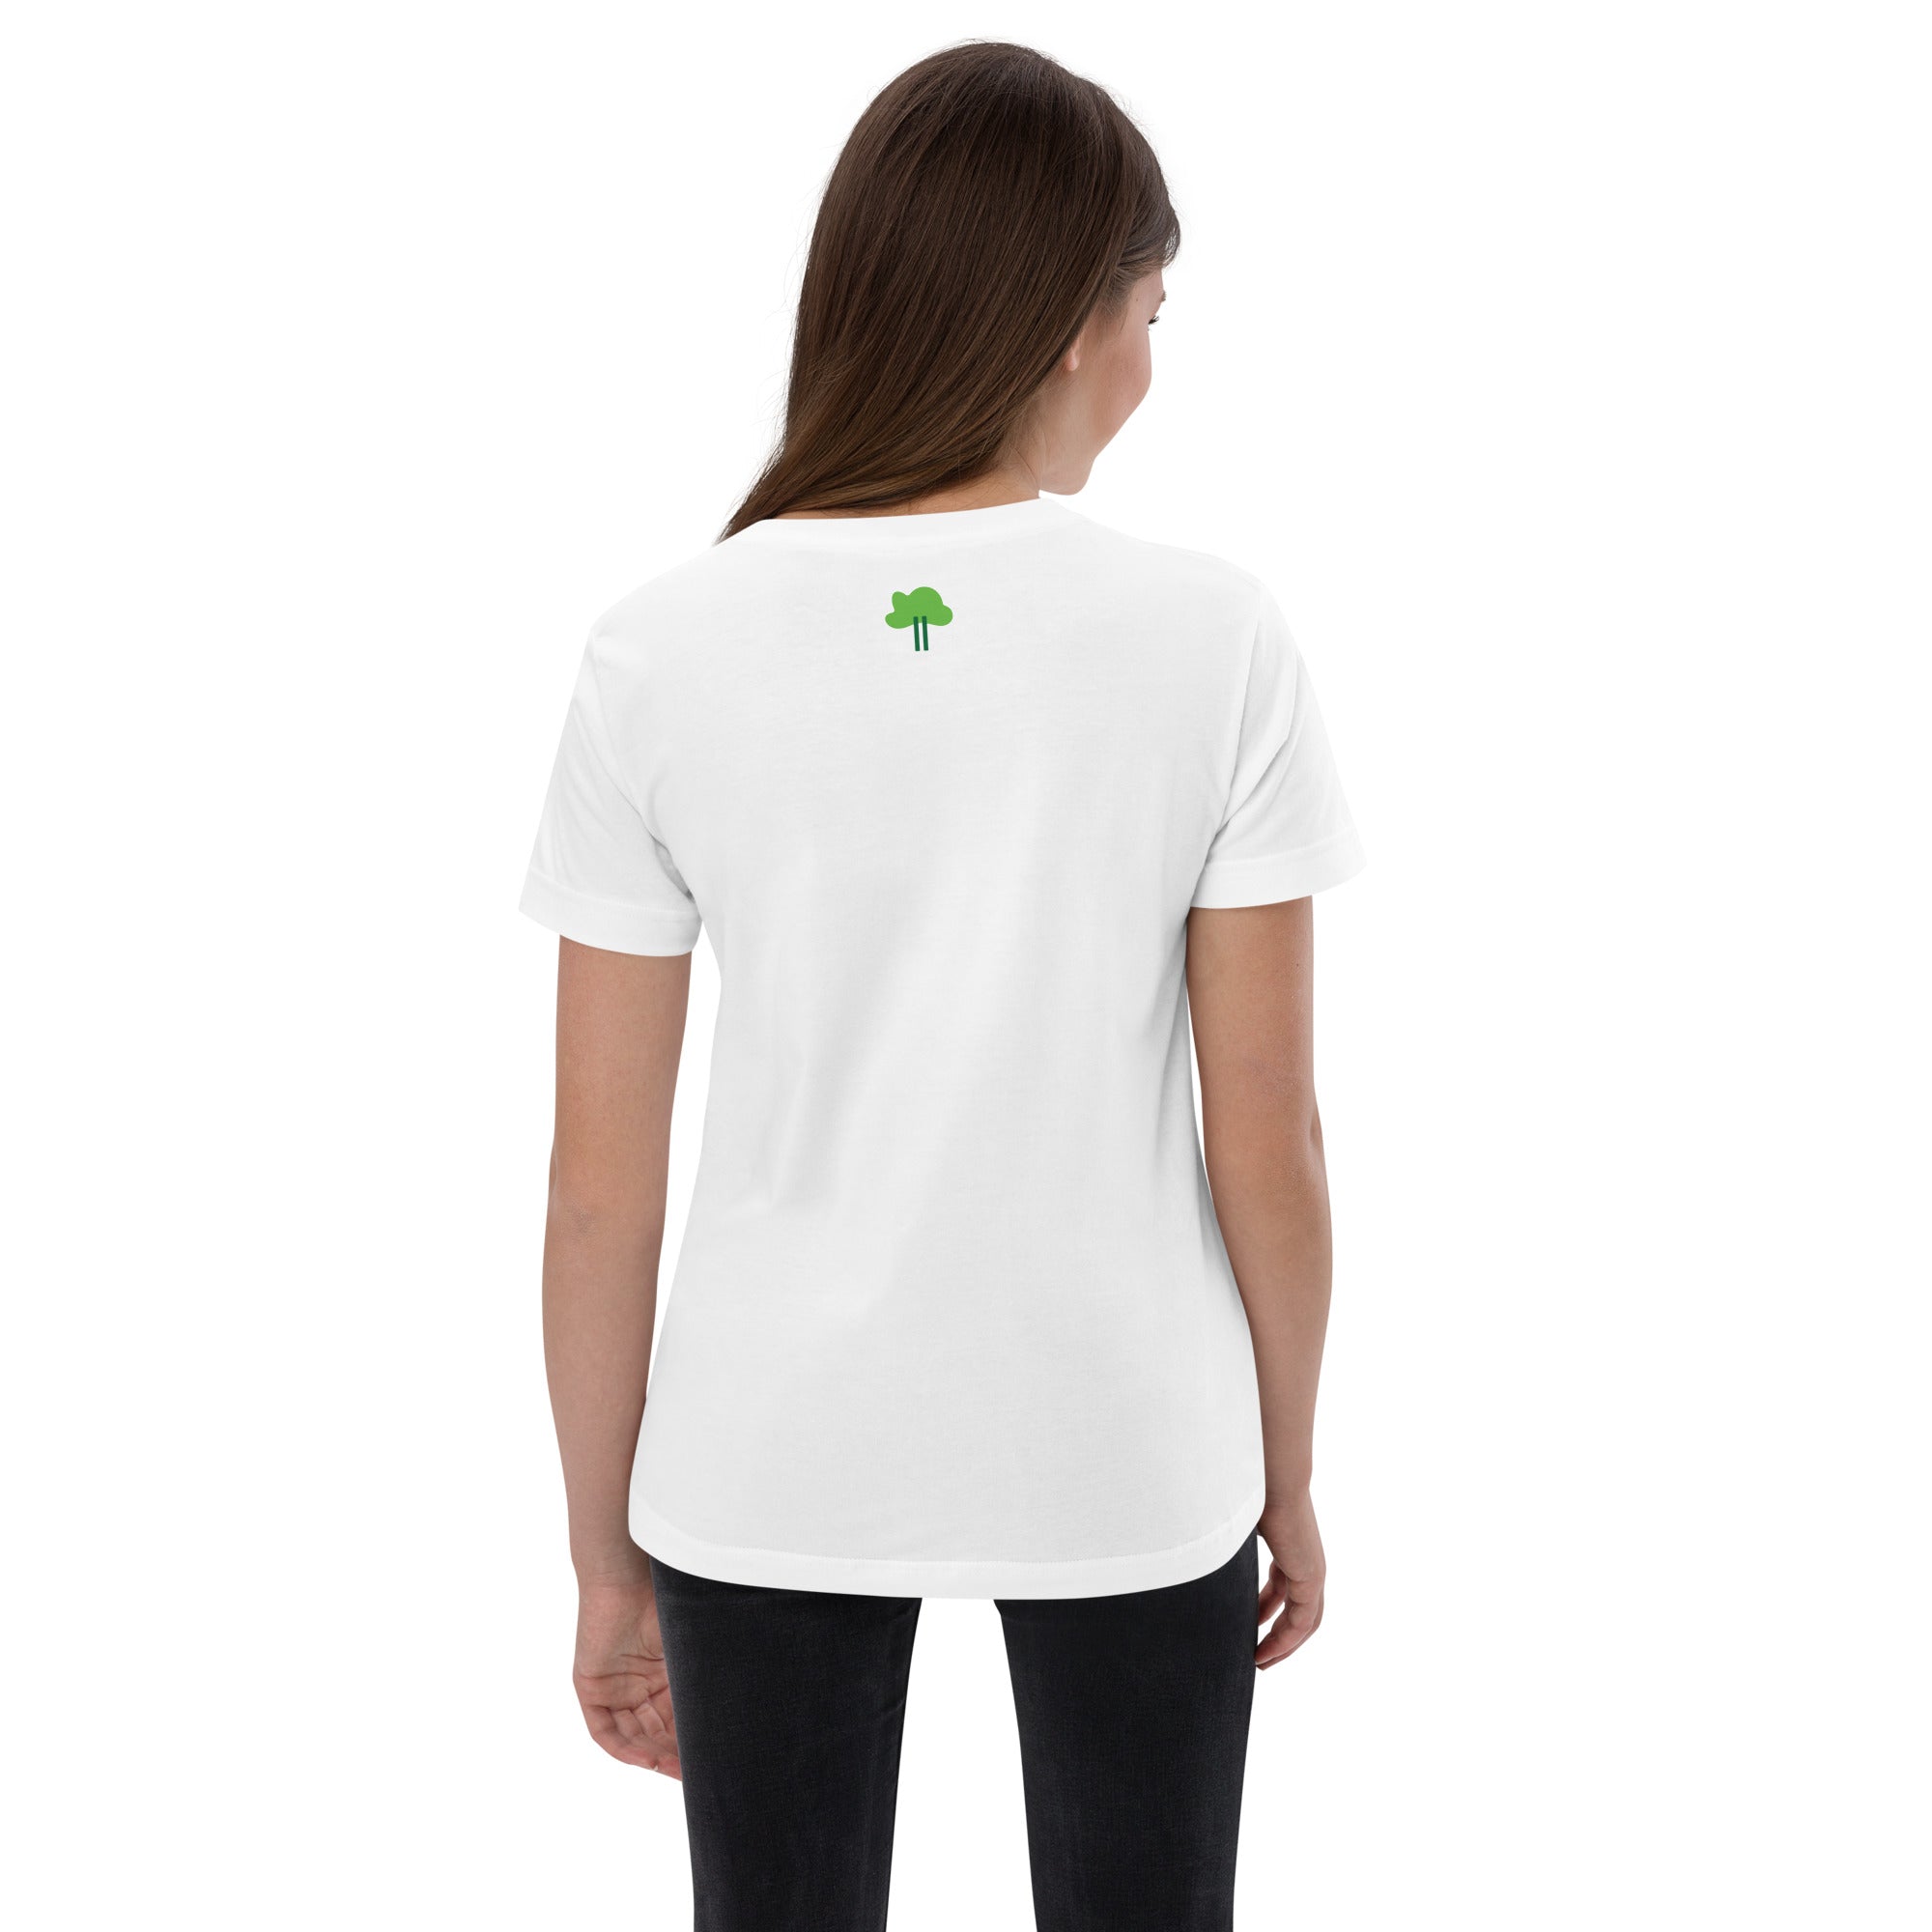 II Temp - Lago - K3 | Youth jersey t-shirt